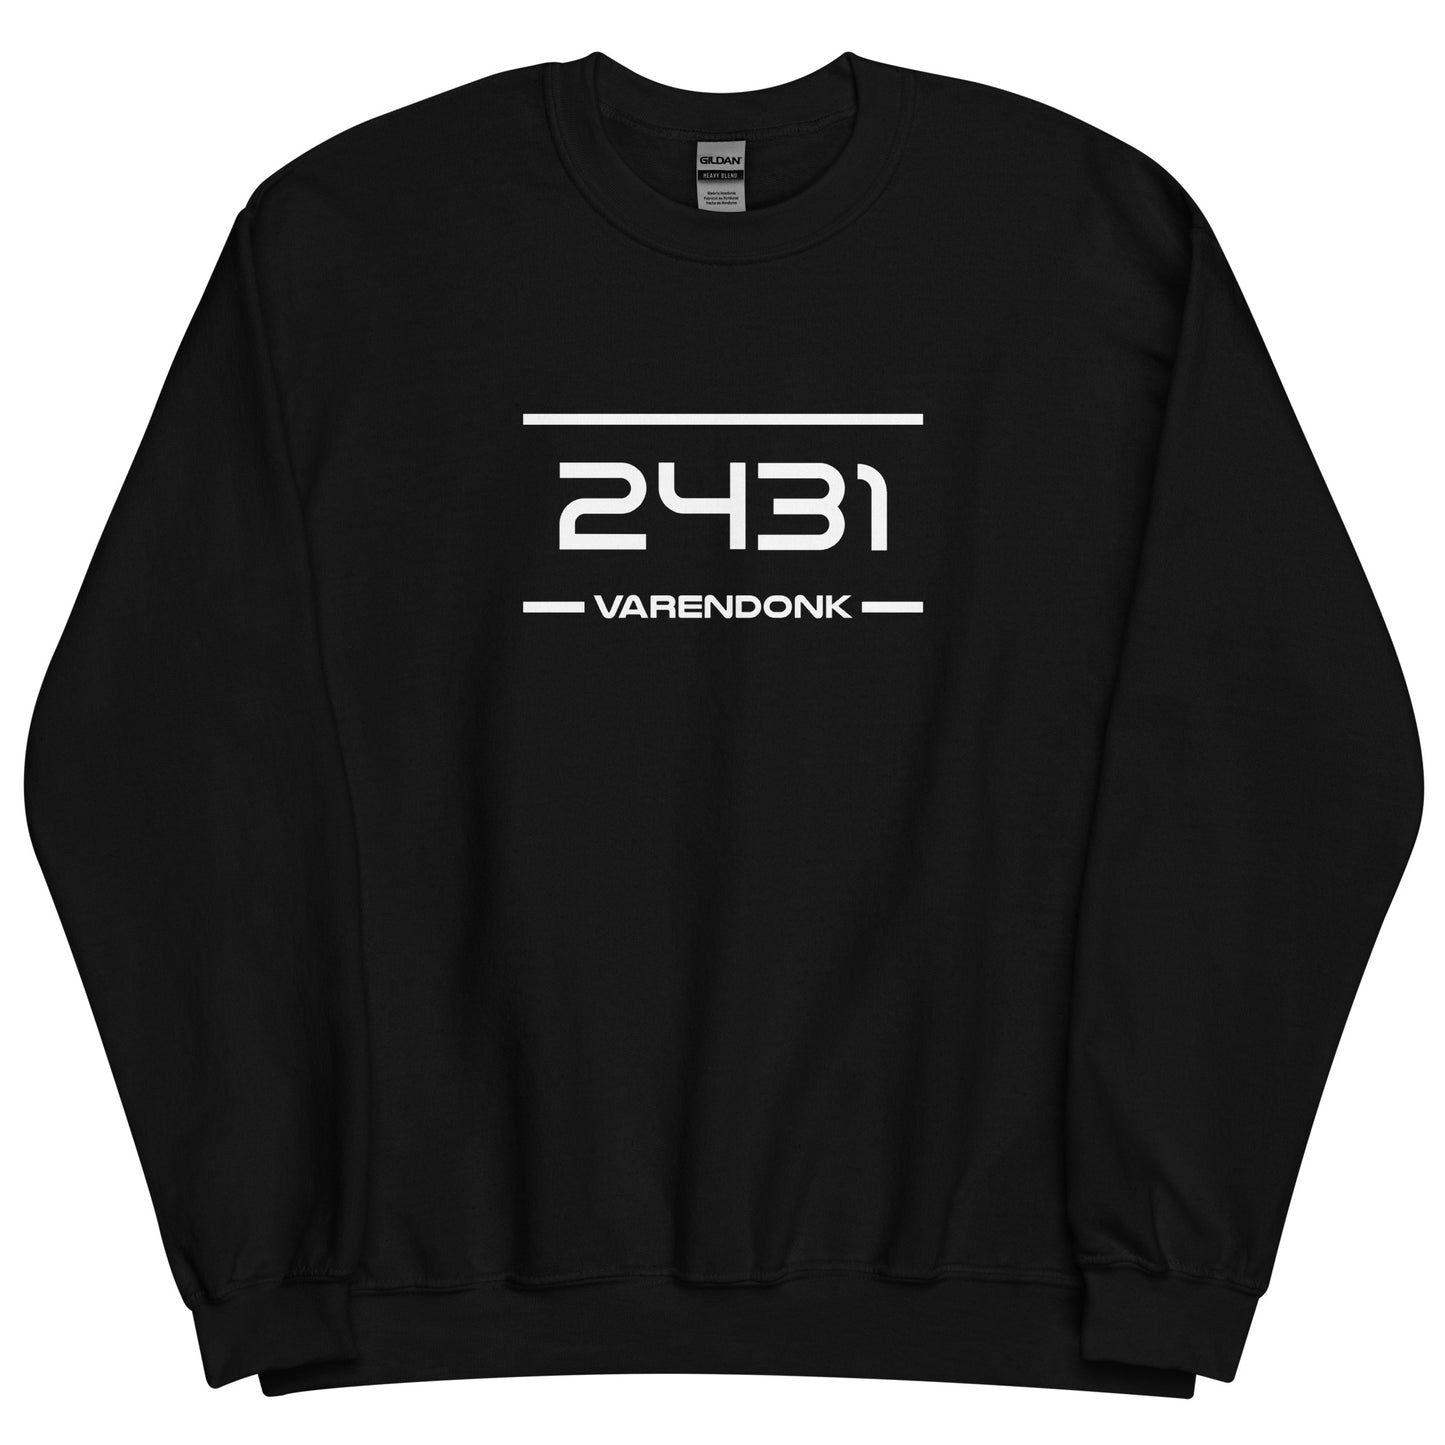 Sweater - 2431 - Varendonk (M/V)